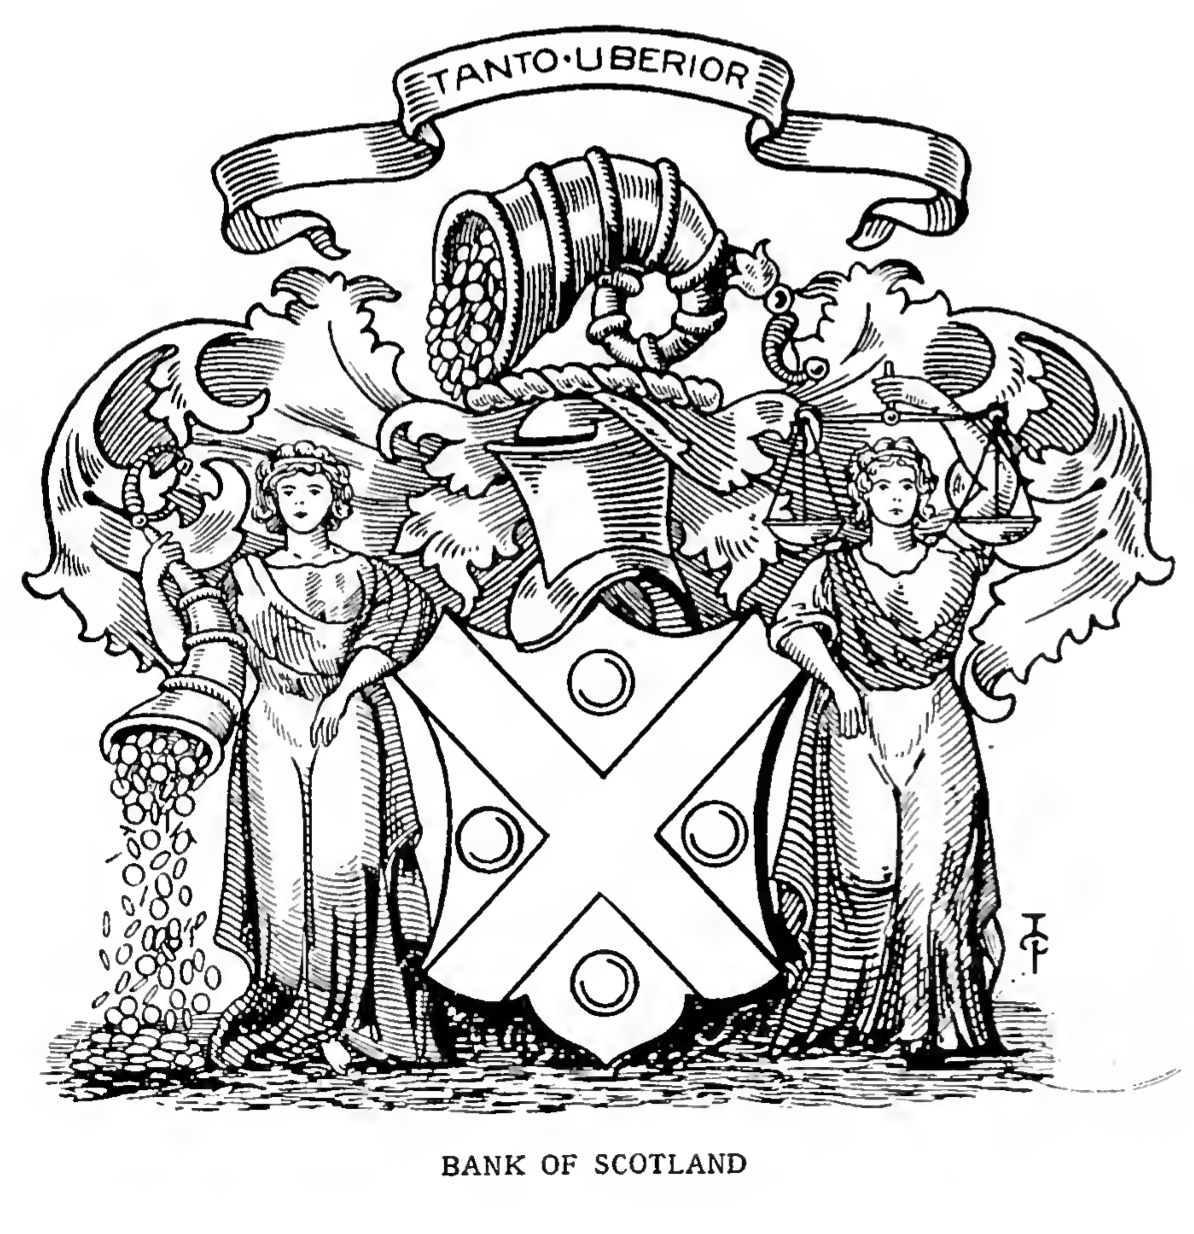 BANK OF SCOTLAND, Governor and Company of.